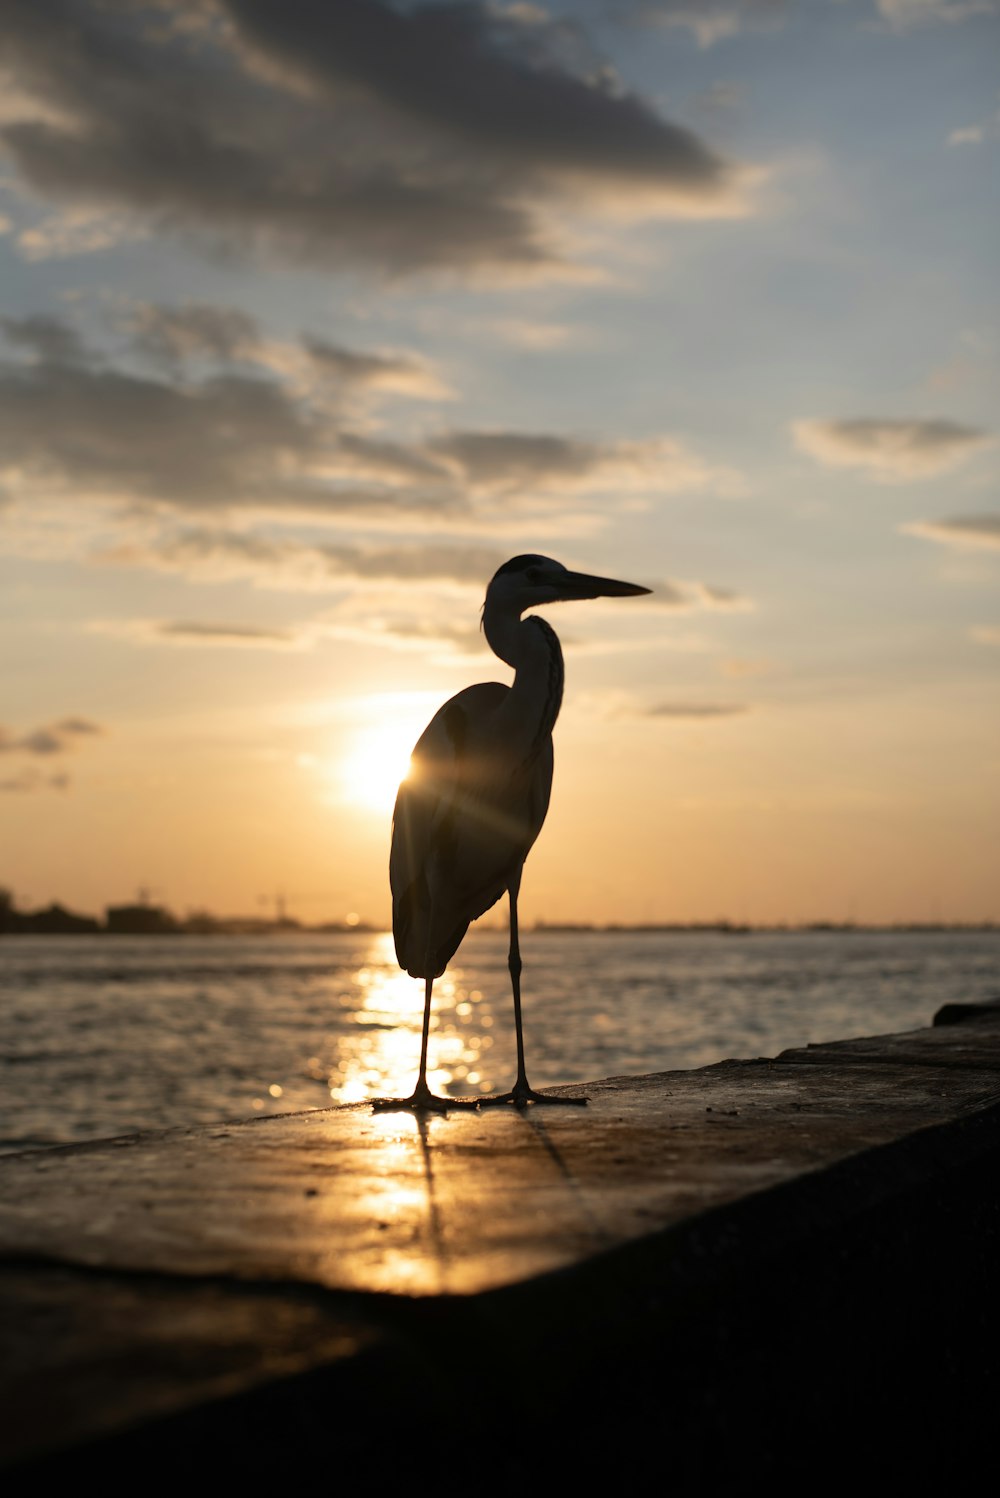 white long beak bird on brown wooden dock during sunset